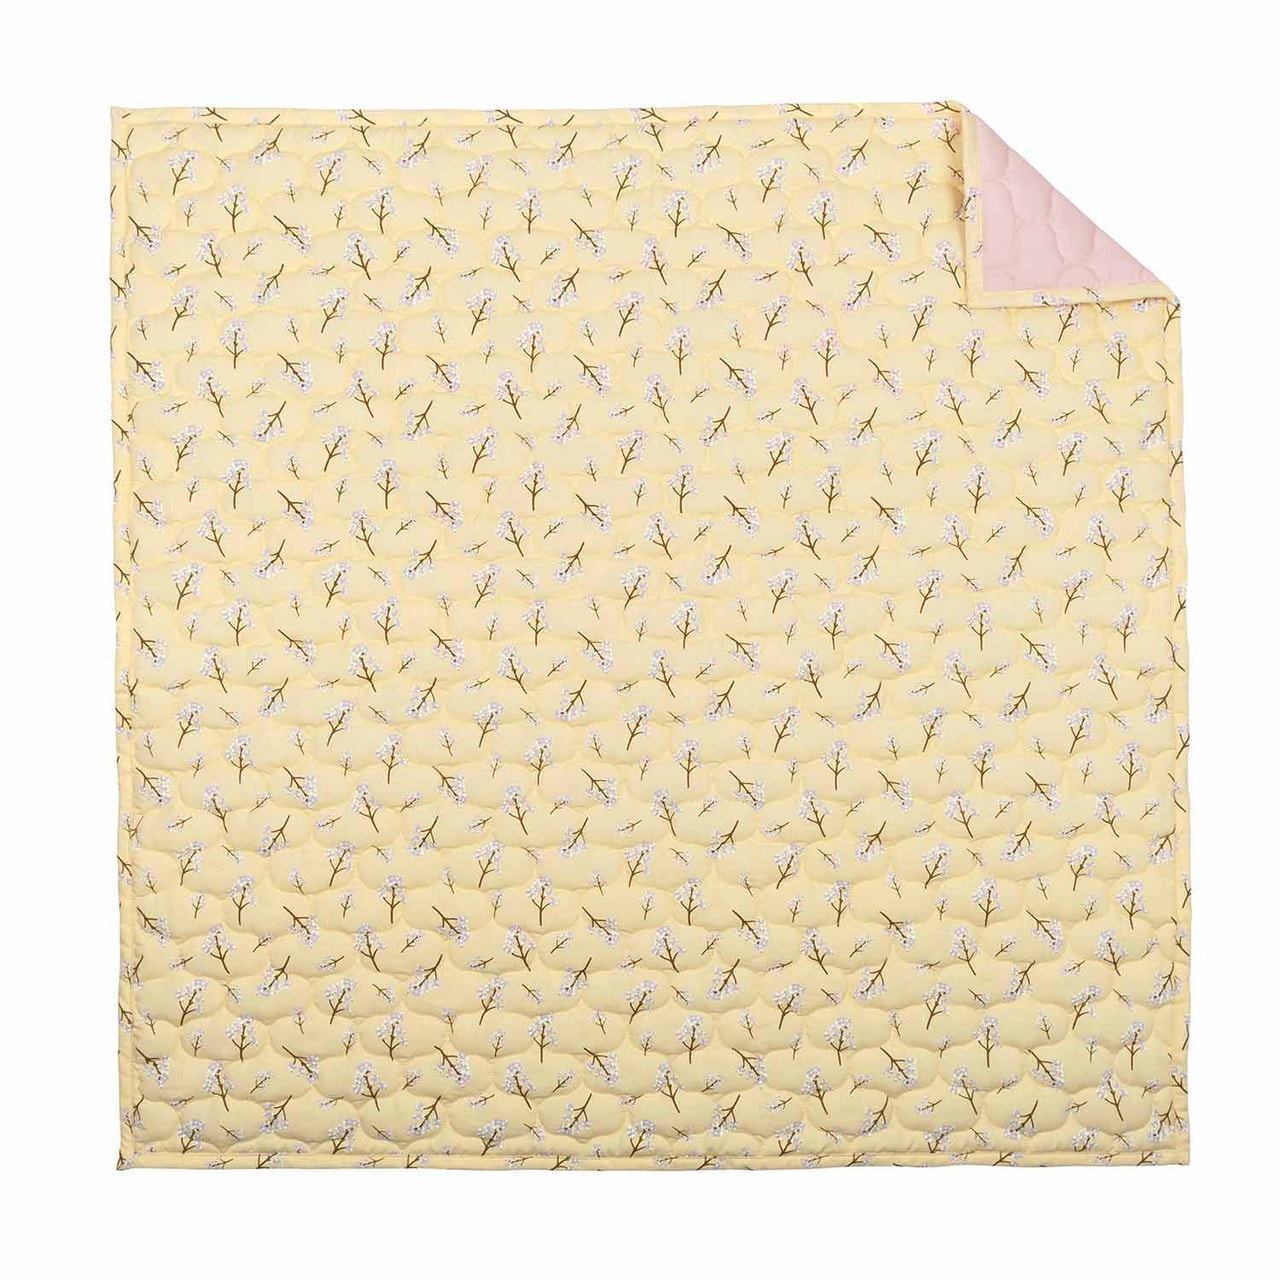 MAMA.LICIOUS müsli Filipendula blanket -Calm Yellow - 1579028500